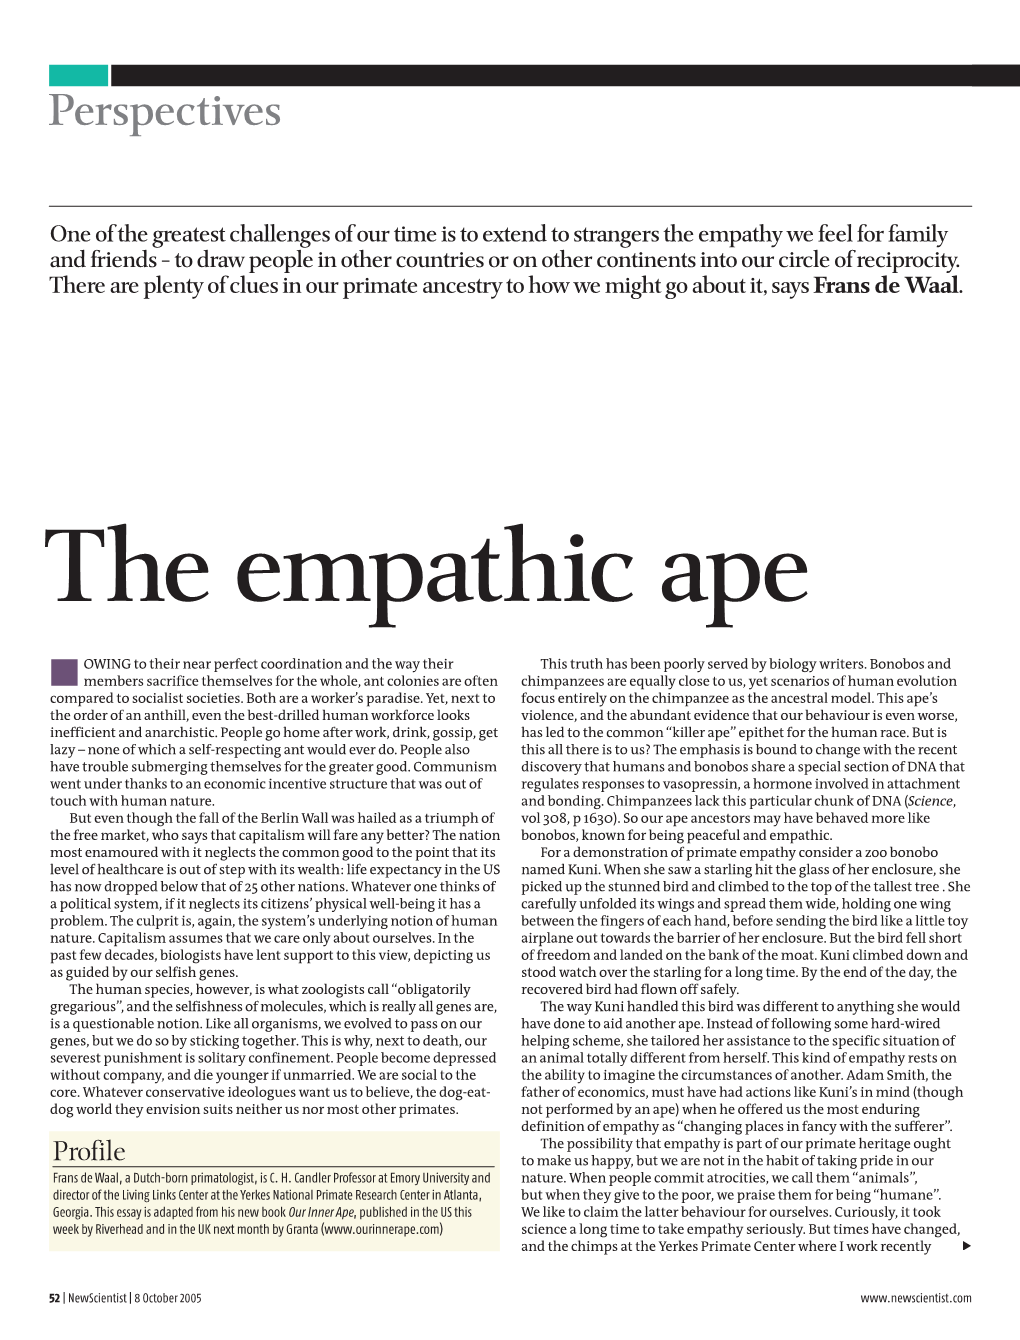 The Empathic Ape